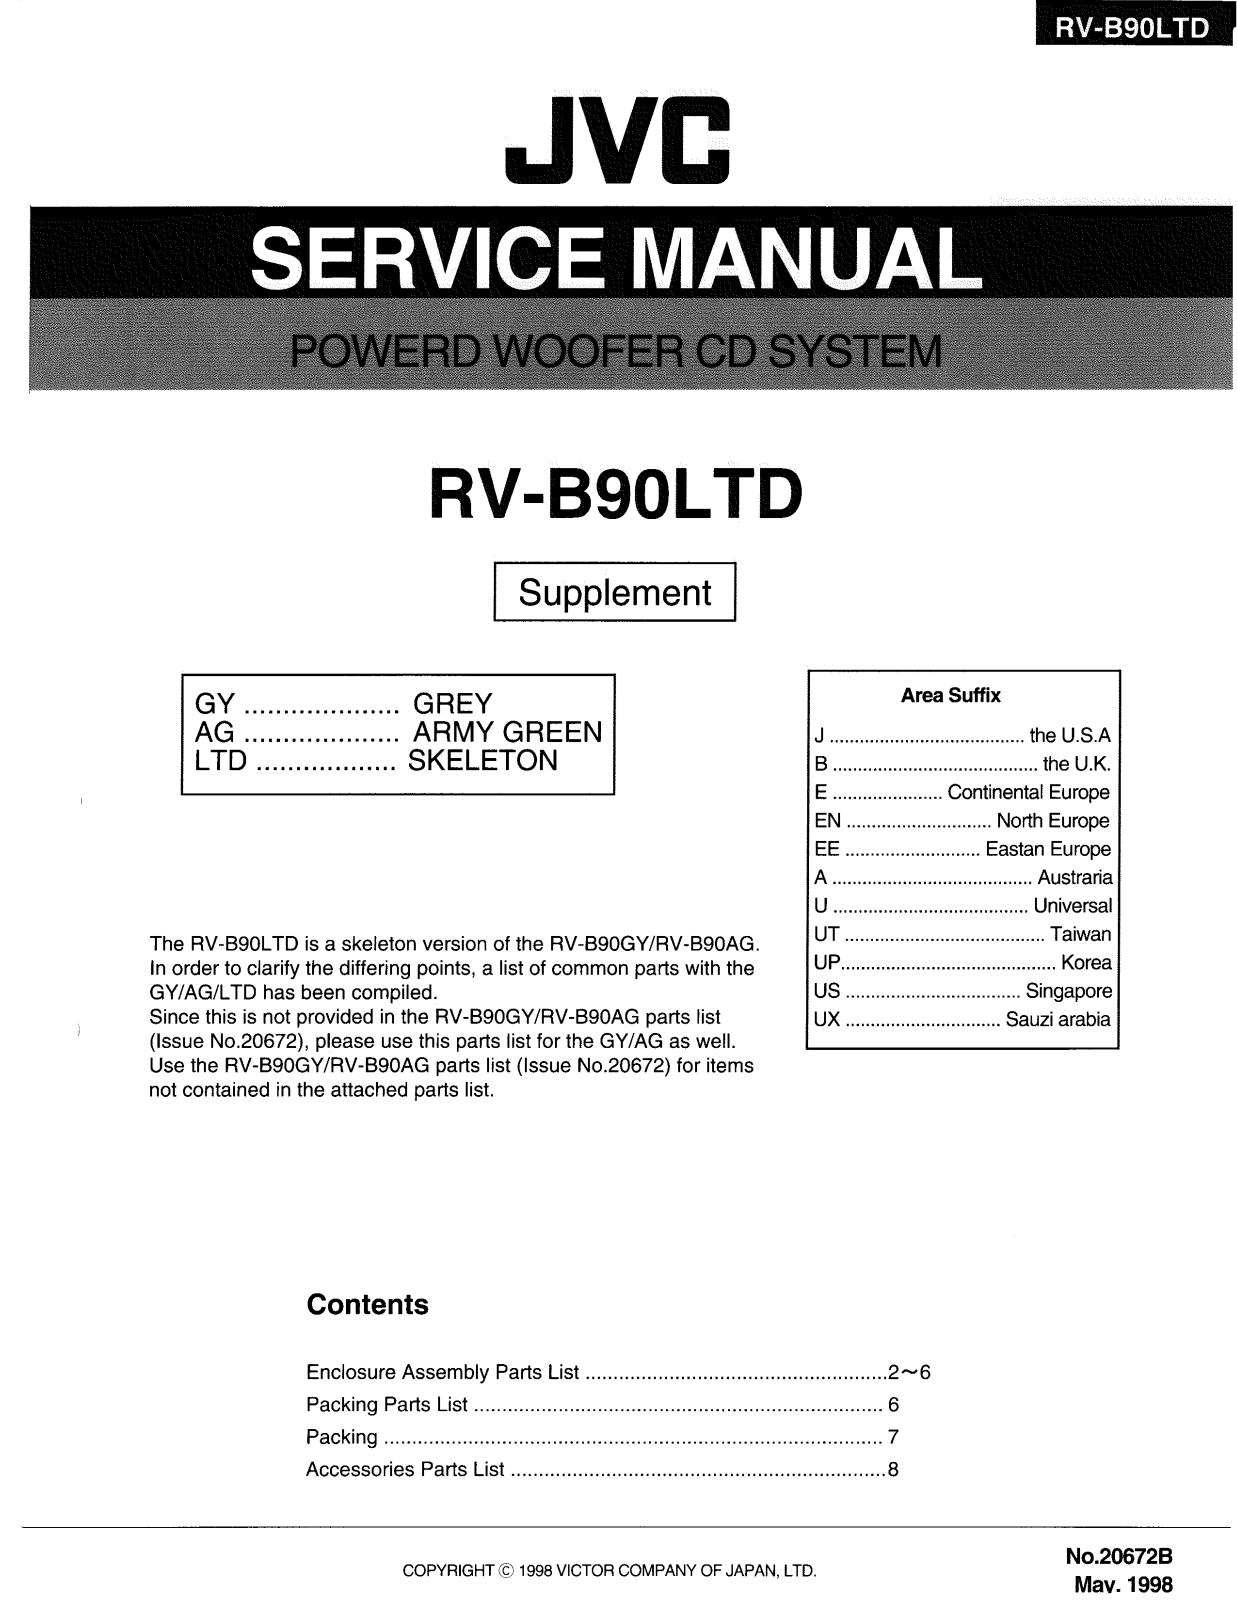 JVC RV-B90LTDA, RV-B90LTDB, RV-B90LTDE, RV-B90LTDEE, RV-B90LTDEN Service Manual